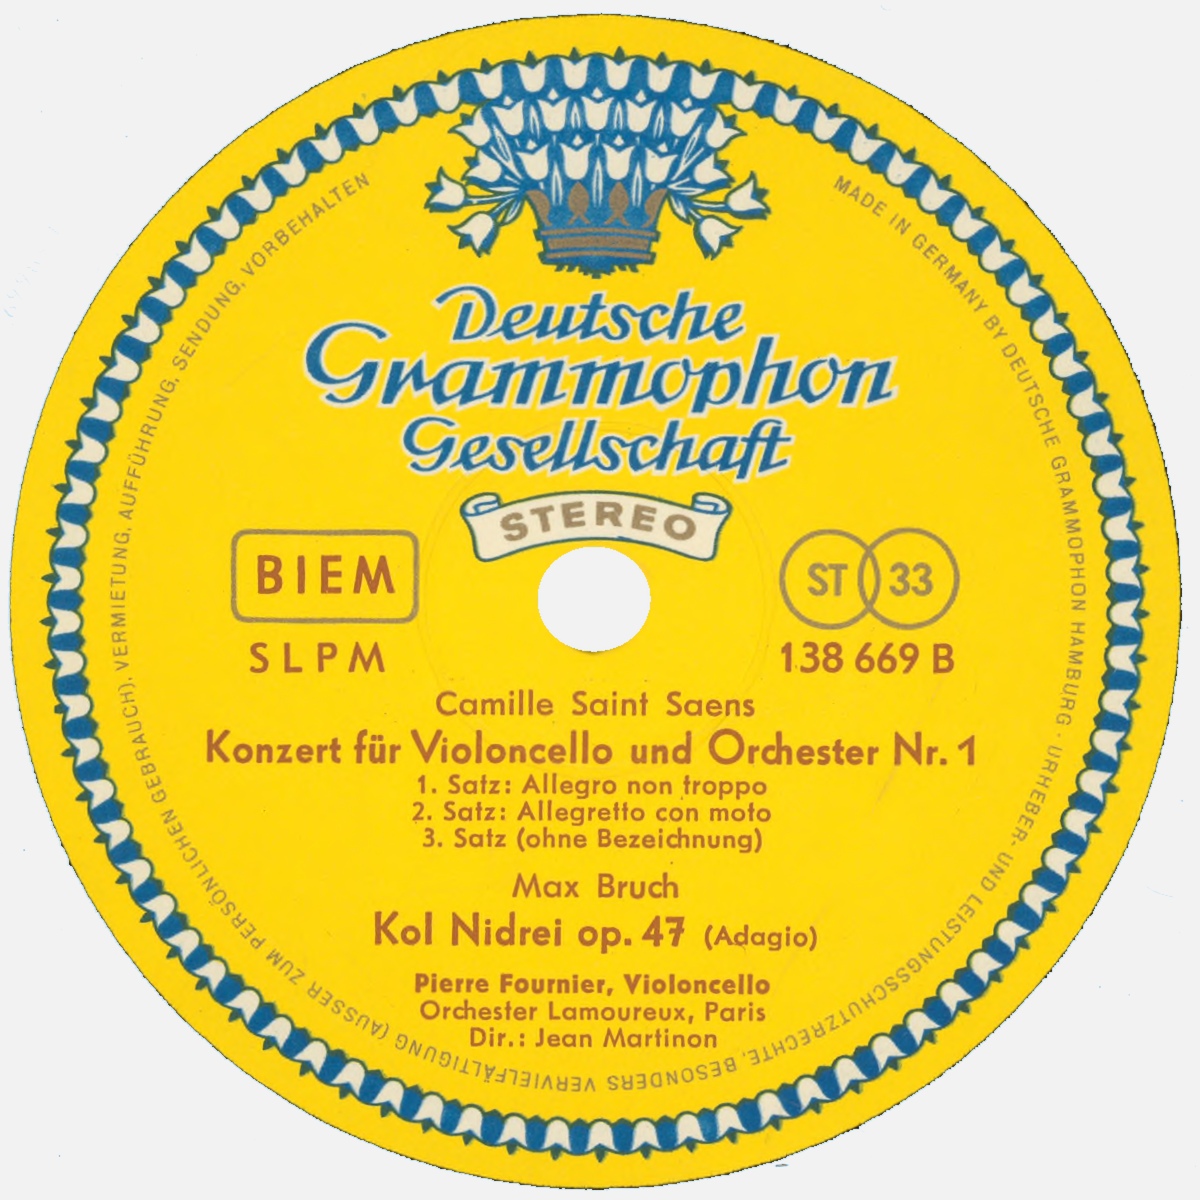 Étiquette verso du disque Deutsche Grammophon SLPM 138669